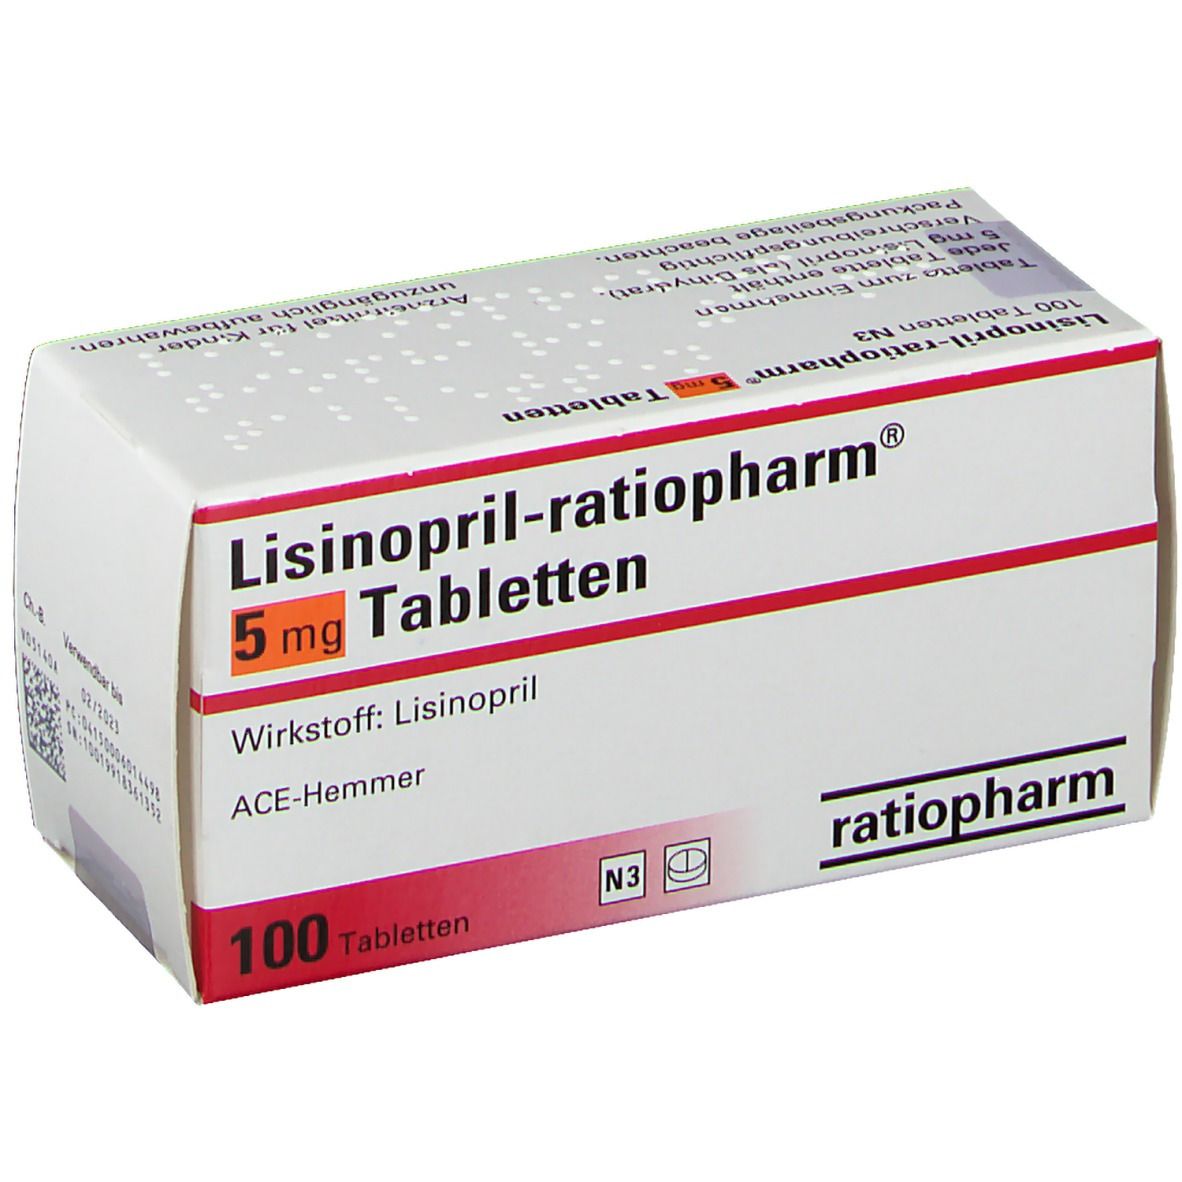 Lisinopril-ratiopharm® 5 mg